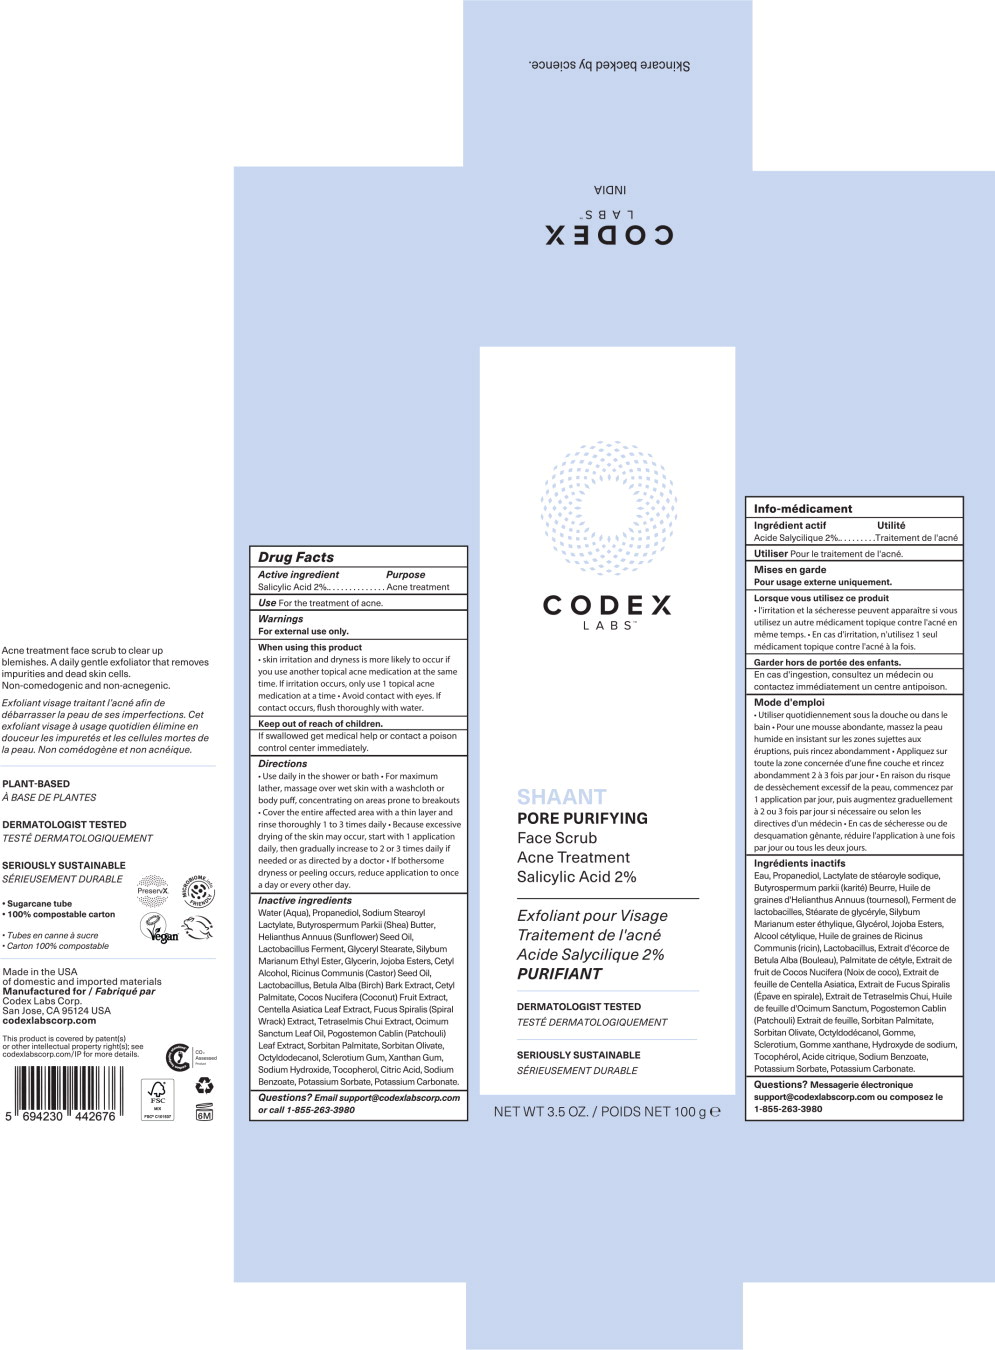 Principal Display Panel – 100g Carton Label
